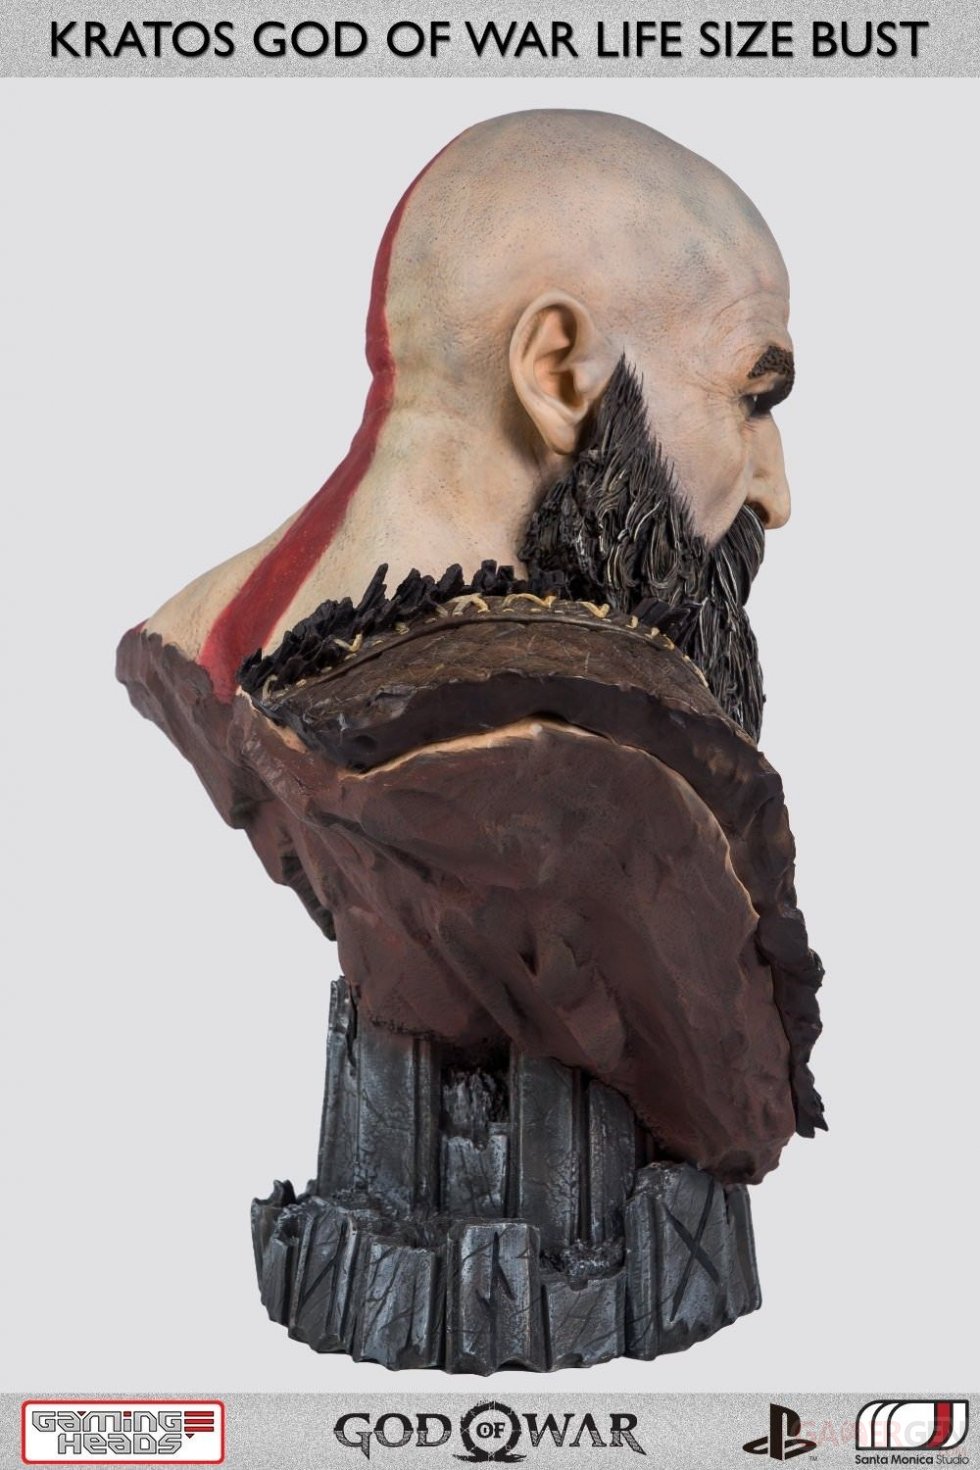 God-of-War-Kratos-buste-52-20-04-2020